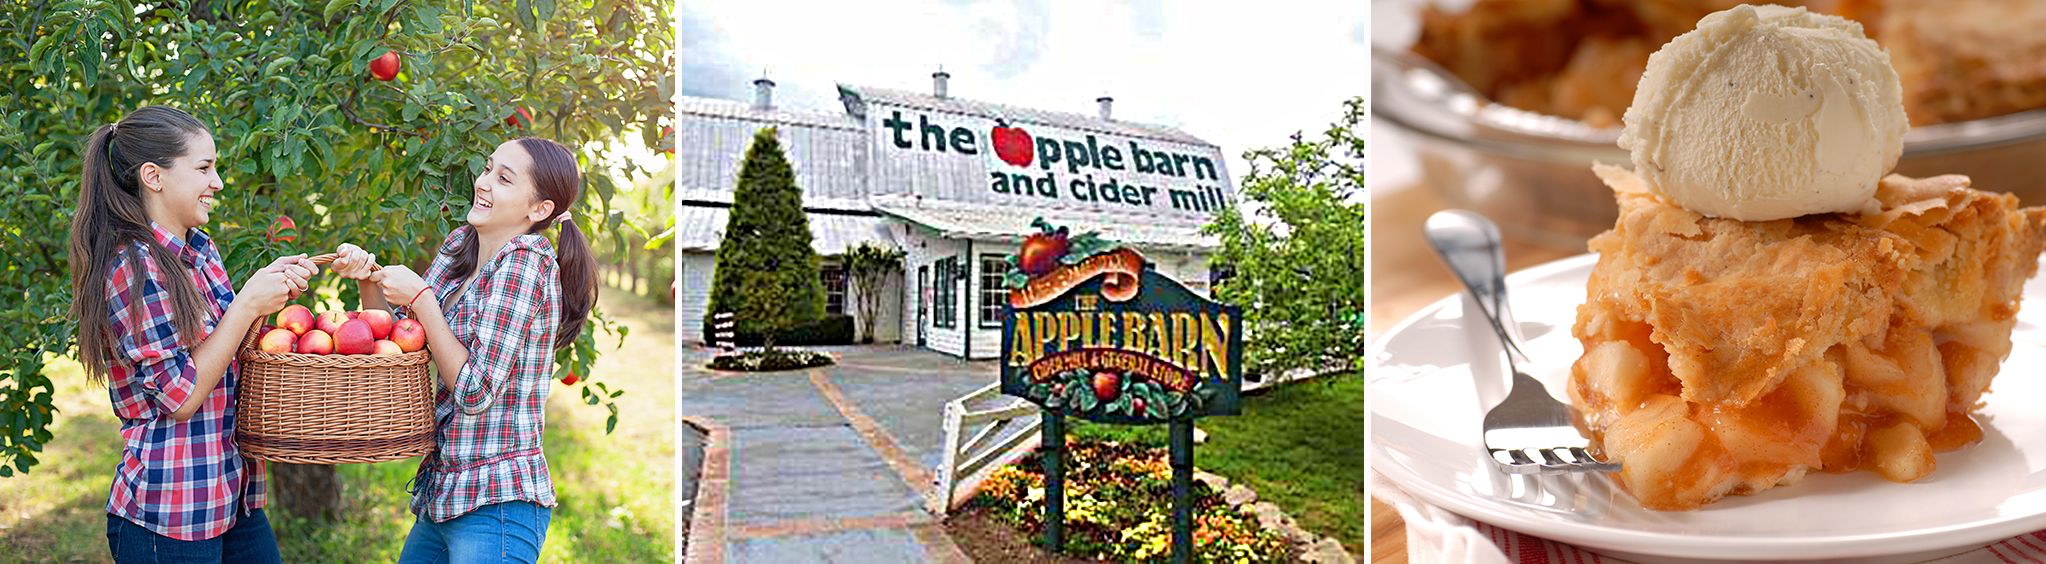 Apple Barn Cider Mill & General Store